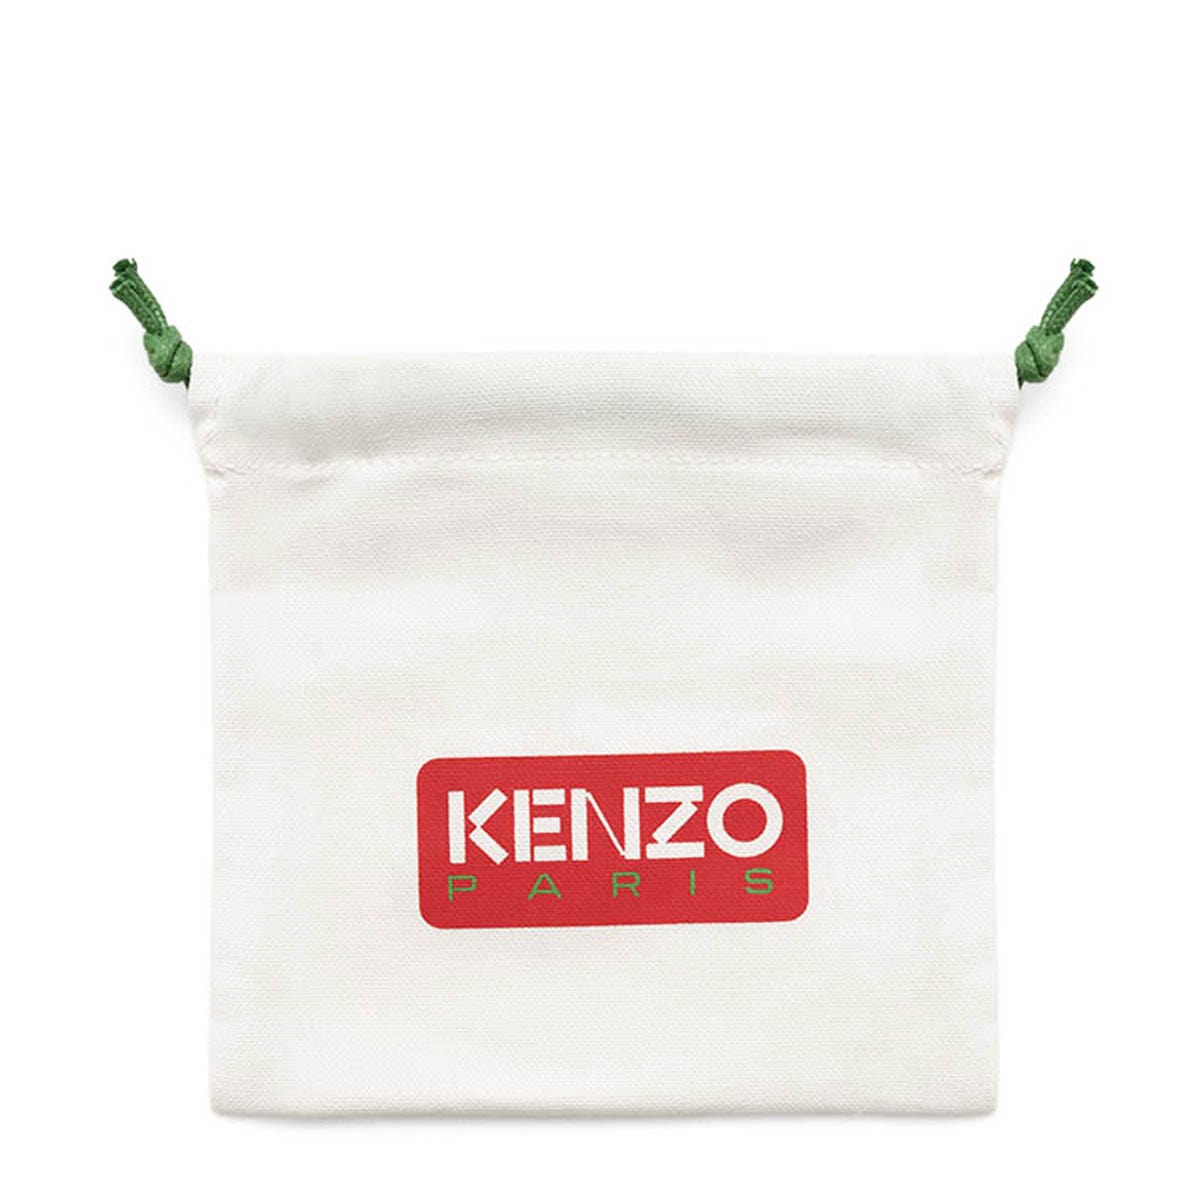 Kenzo Wallets & Cases BLACK / O/S CARD HOLDER